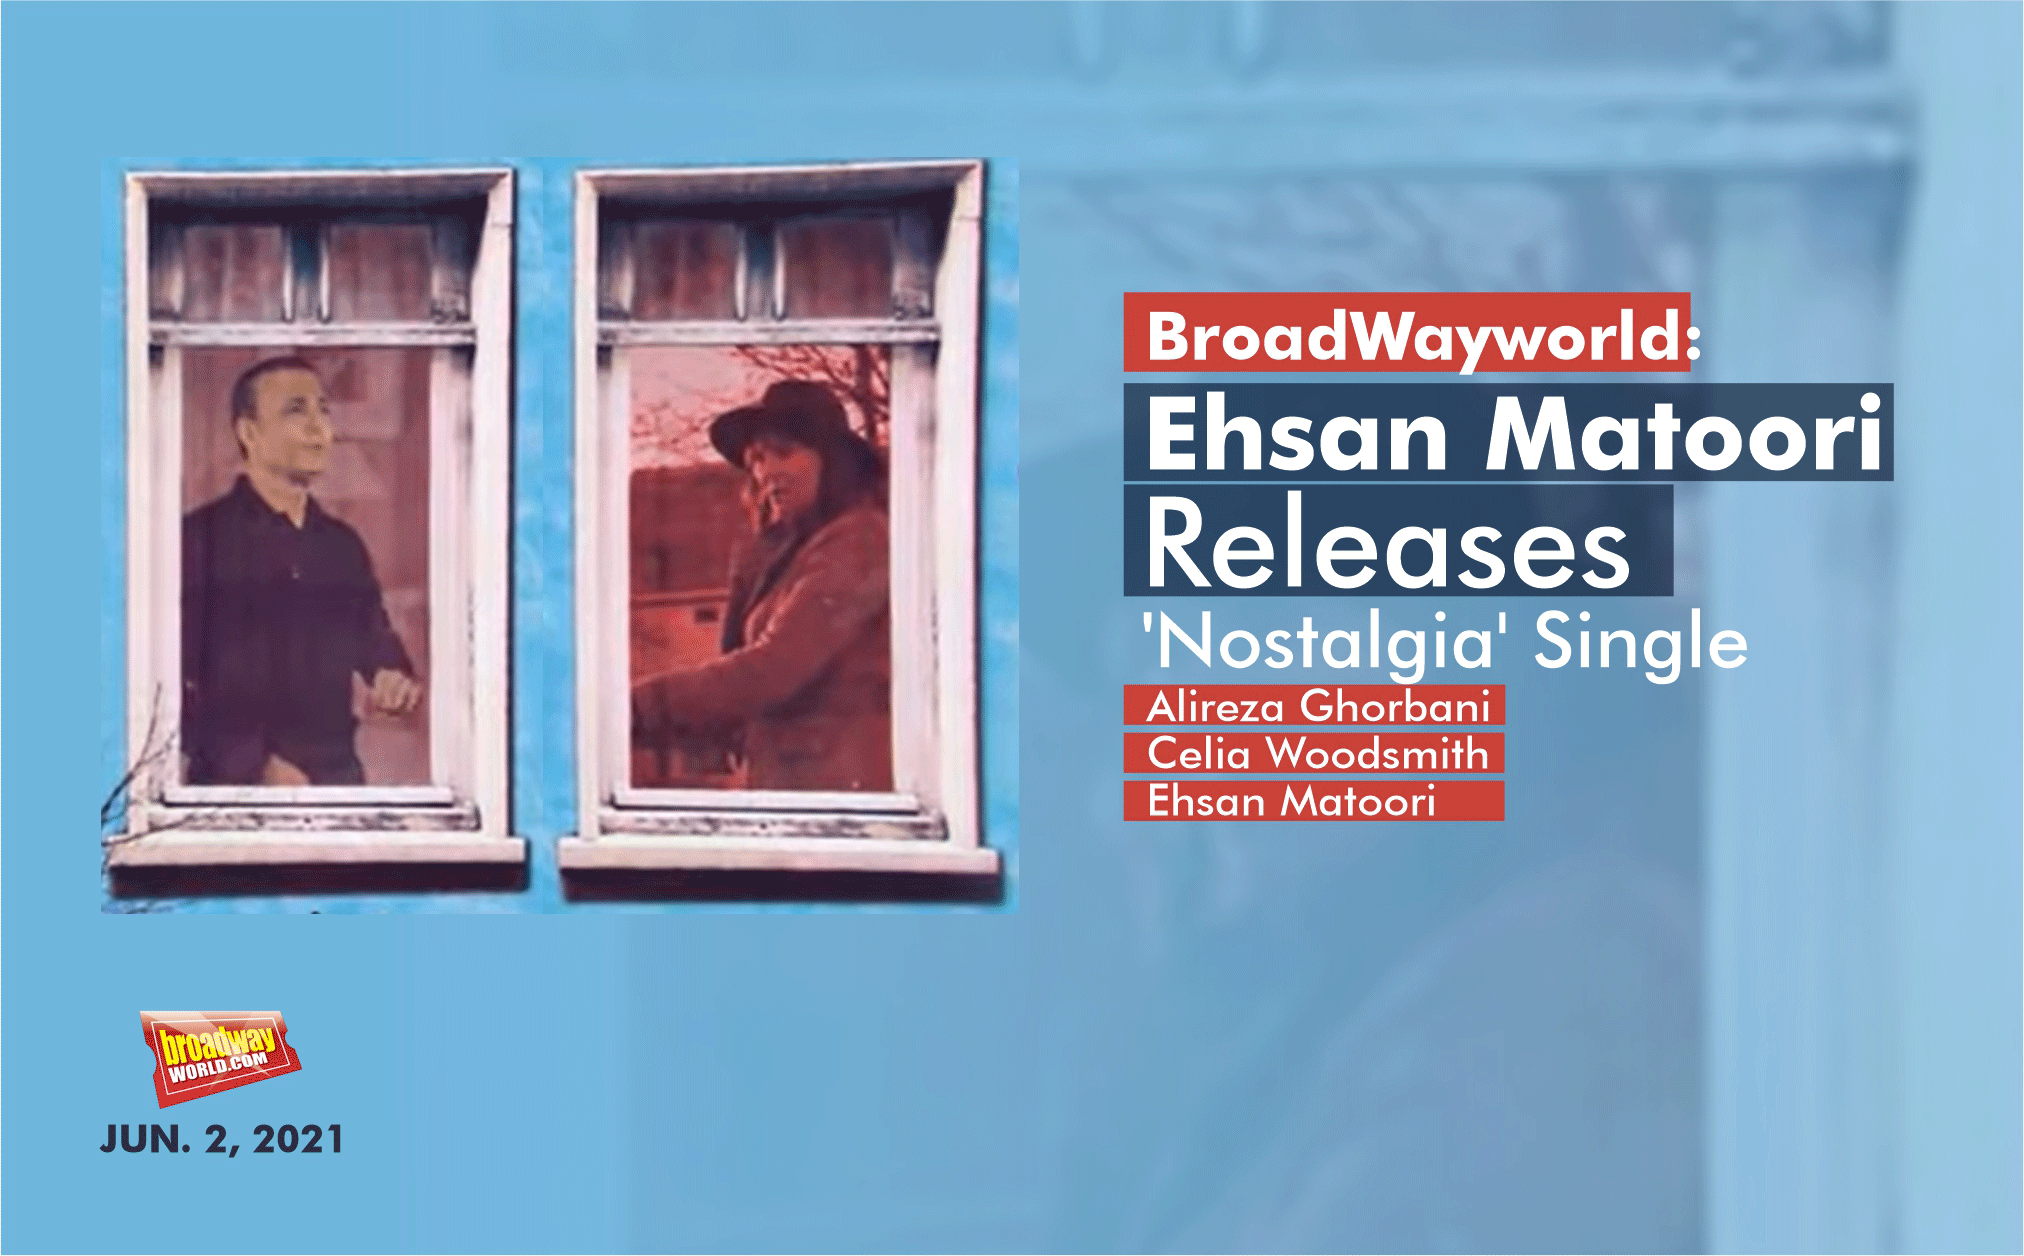 broadwayworld: Ehsan Matoori Releases 'Nostalgia' Single